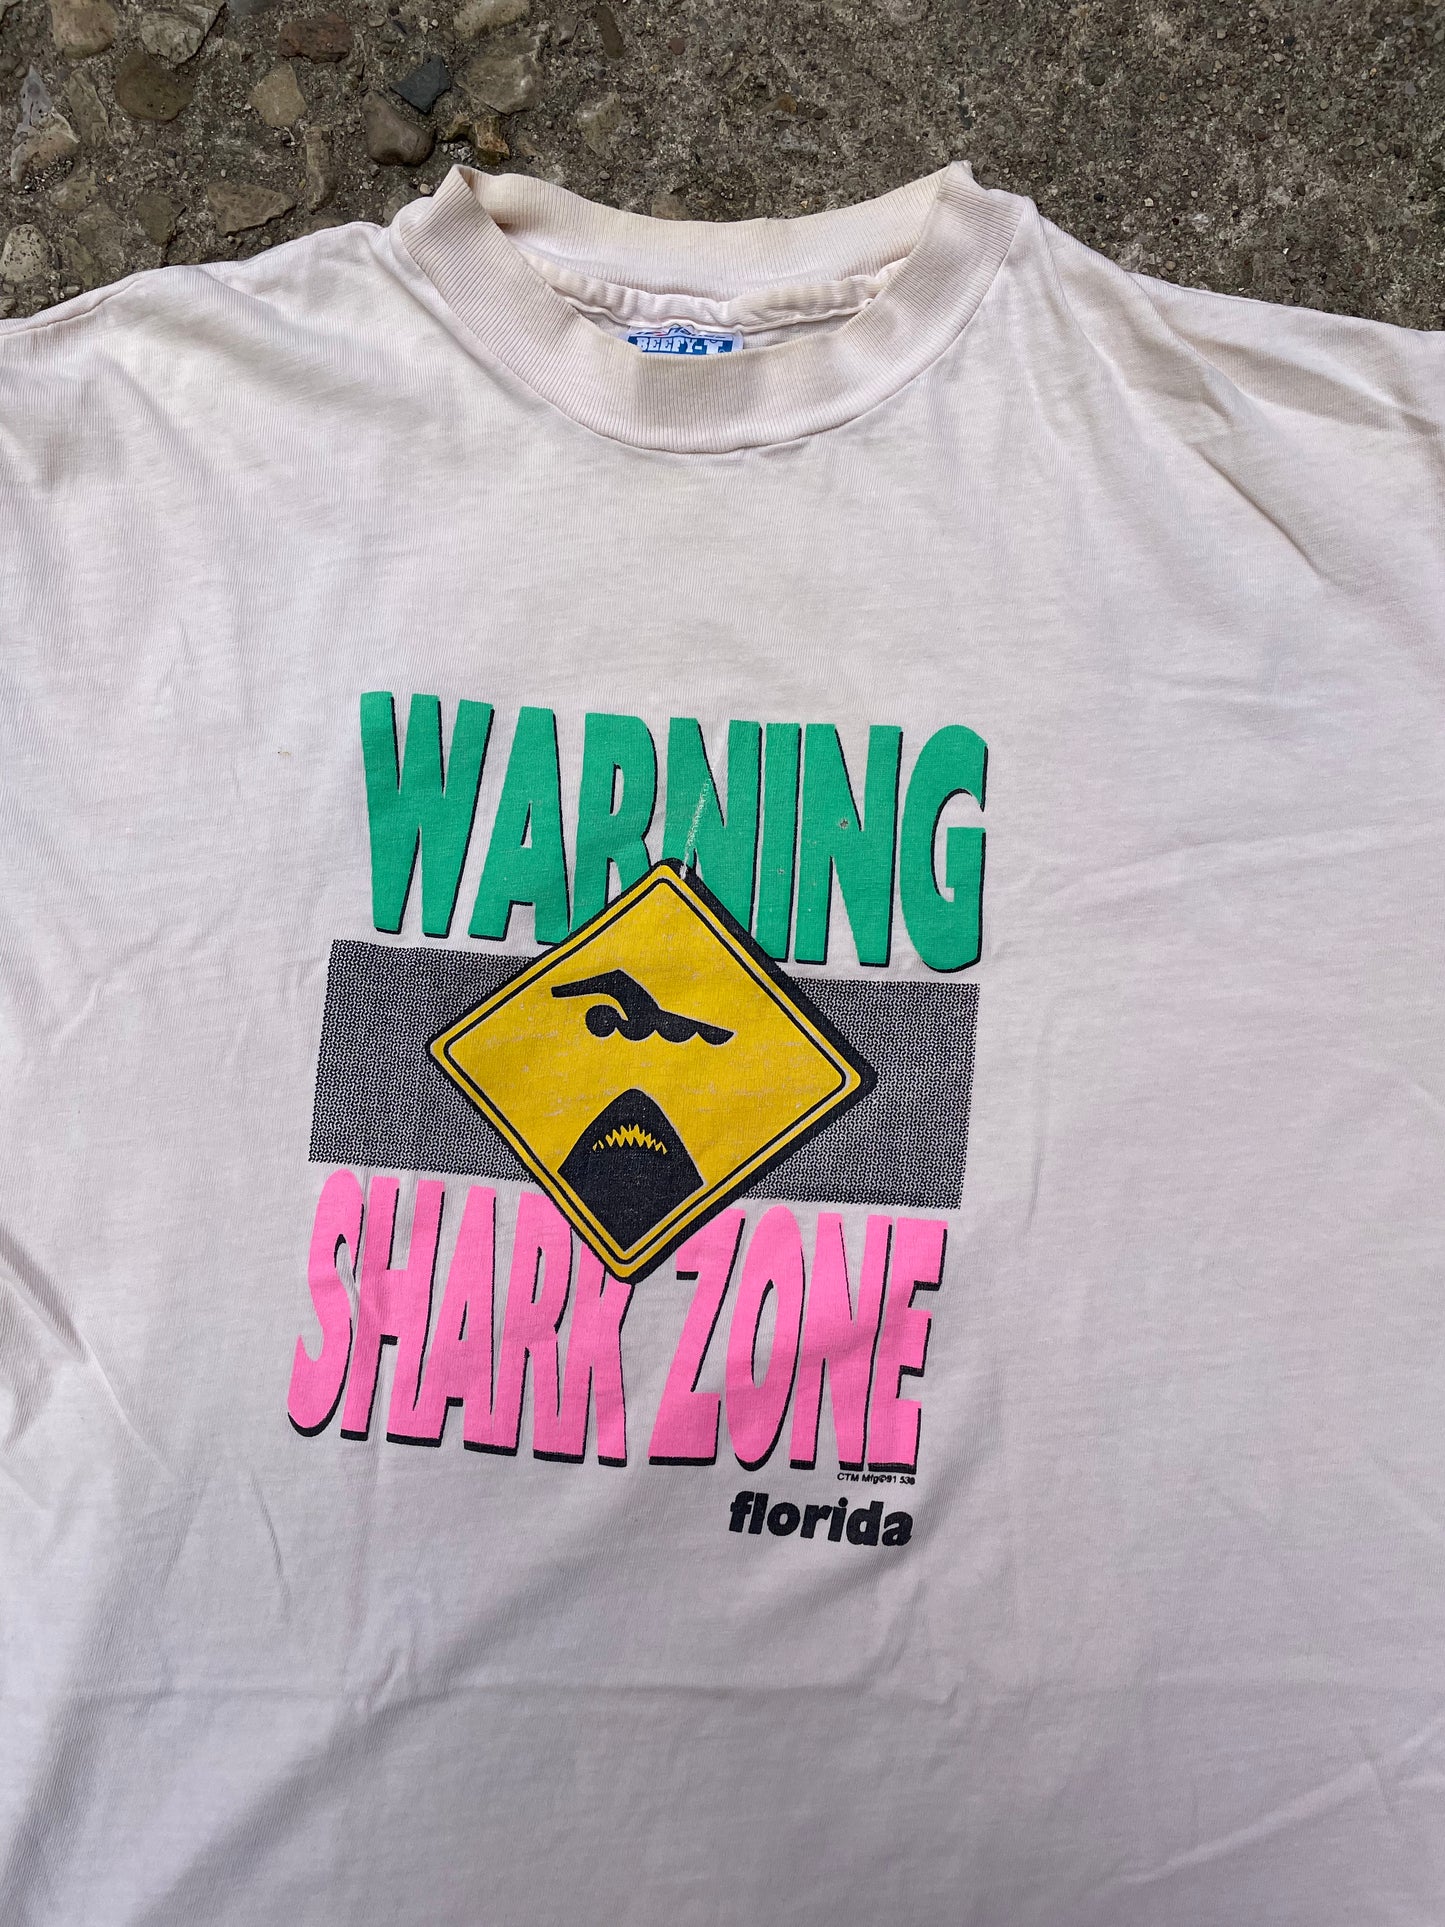 1991 'Warning Shark Zone' Florida Graphic T-Shirt - L